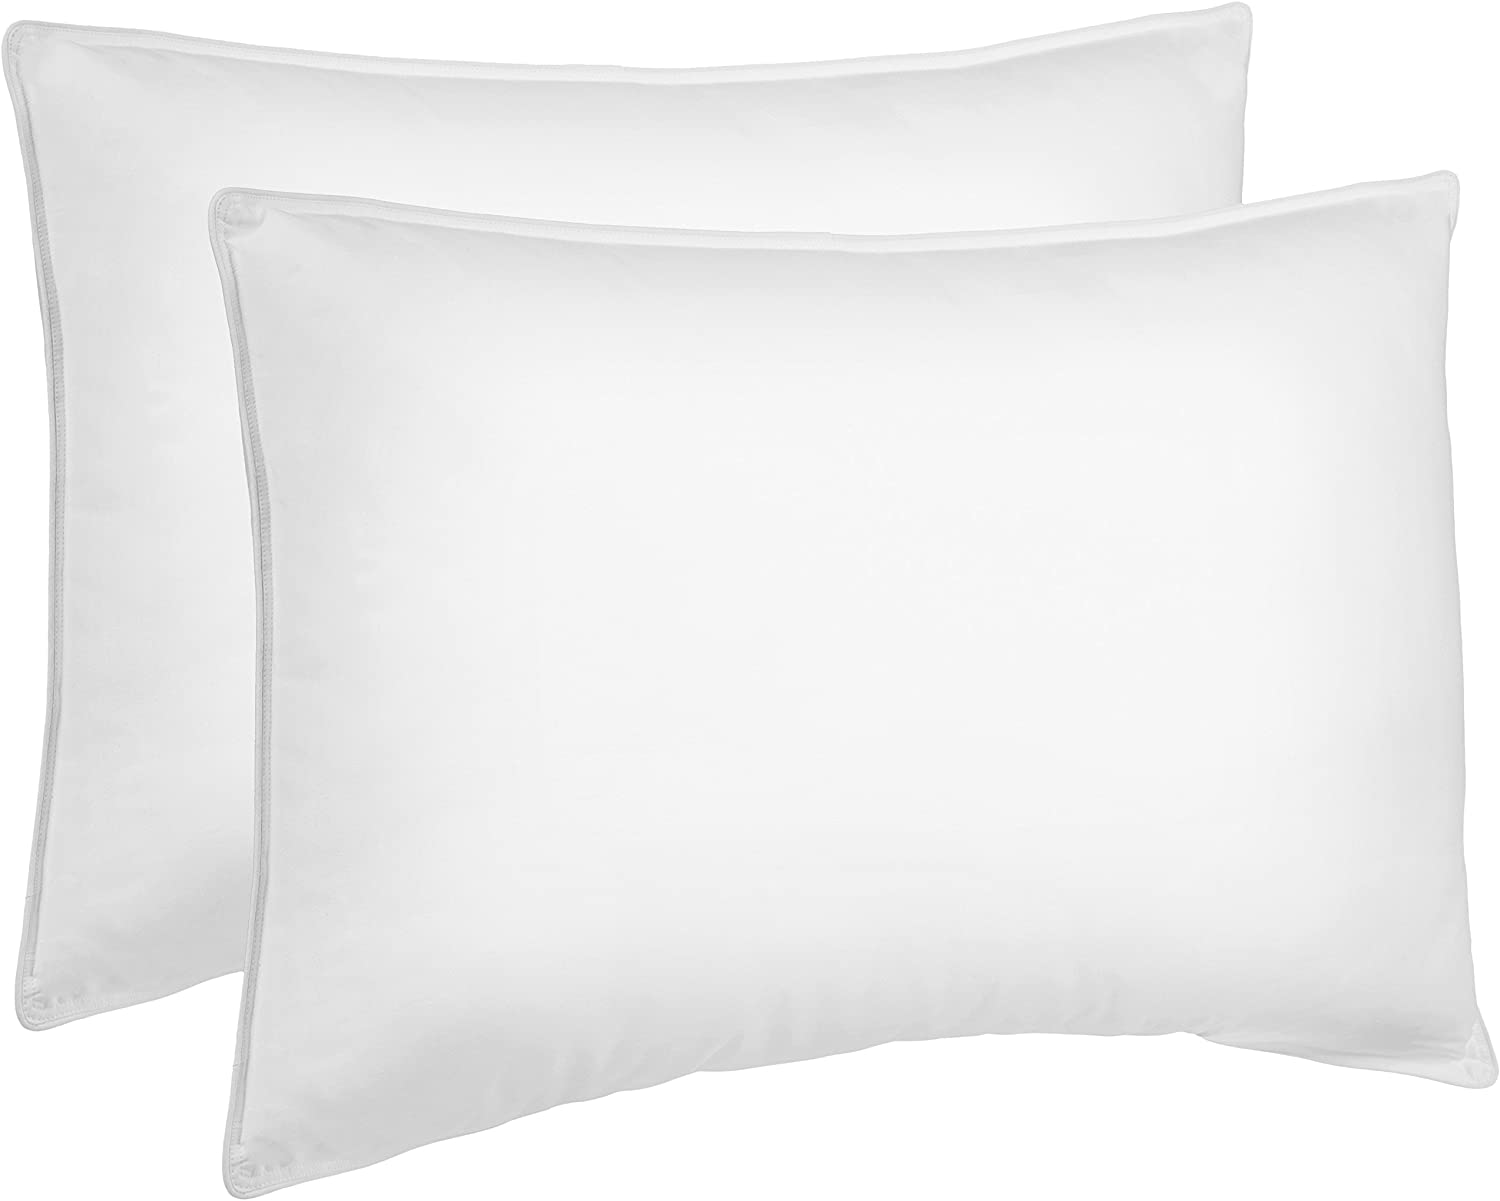 AmazonBasics Polyester Microfiber Pillows, 2-Pack